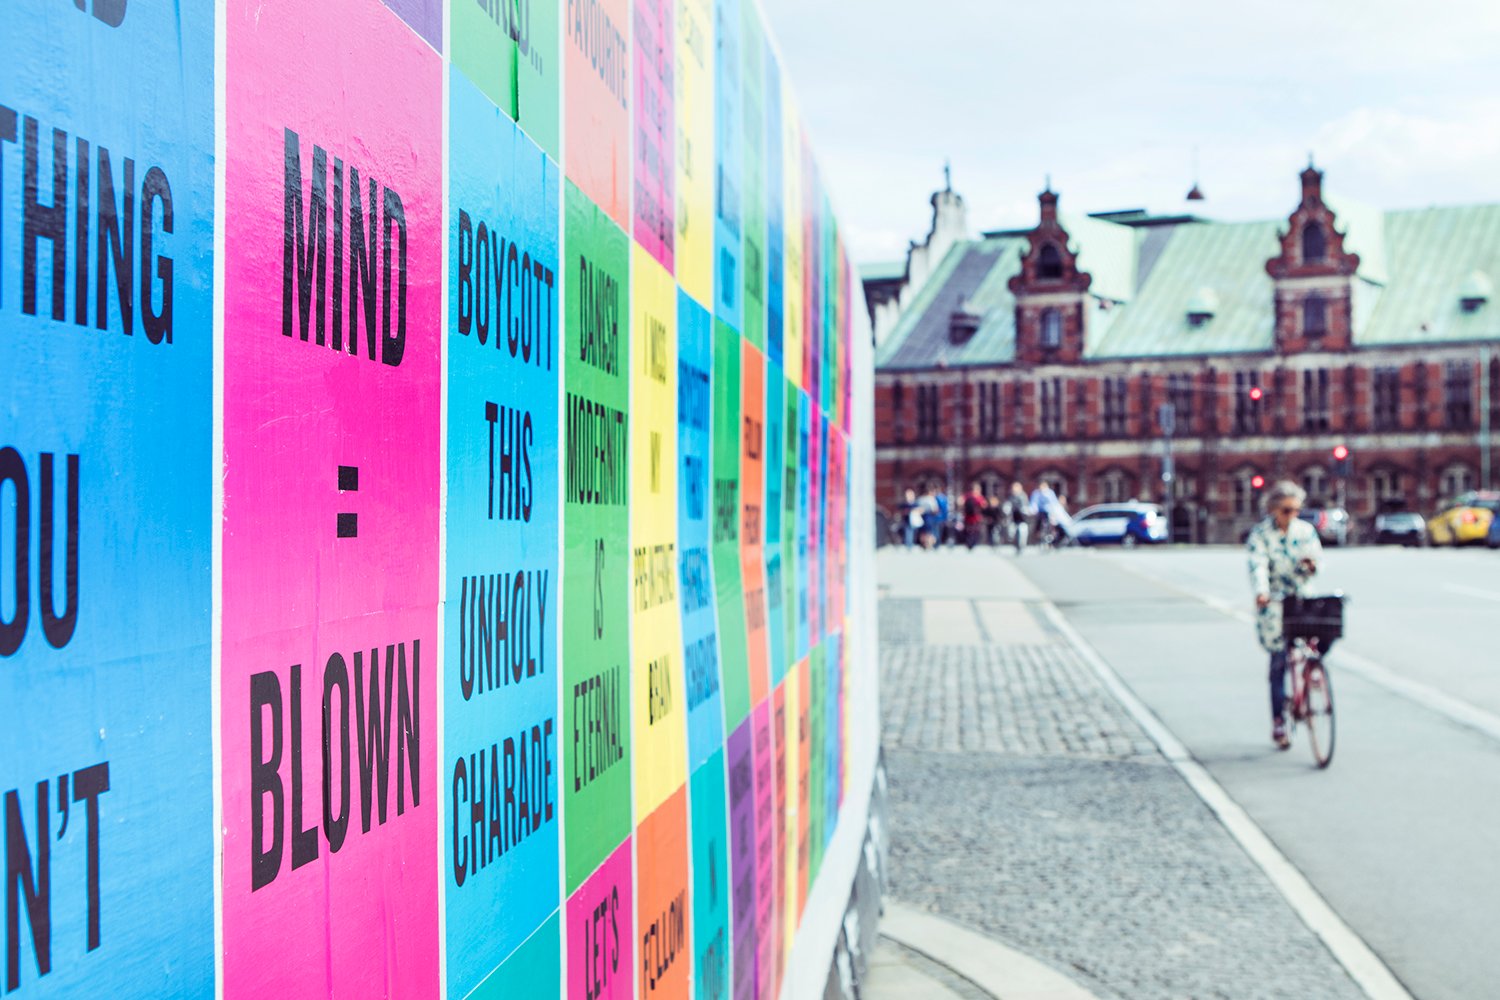 Douglas Coupland posters installed in Copenhagen. Photo courtesy CHART Art Fair and I Do Art Agency